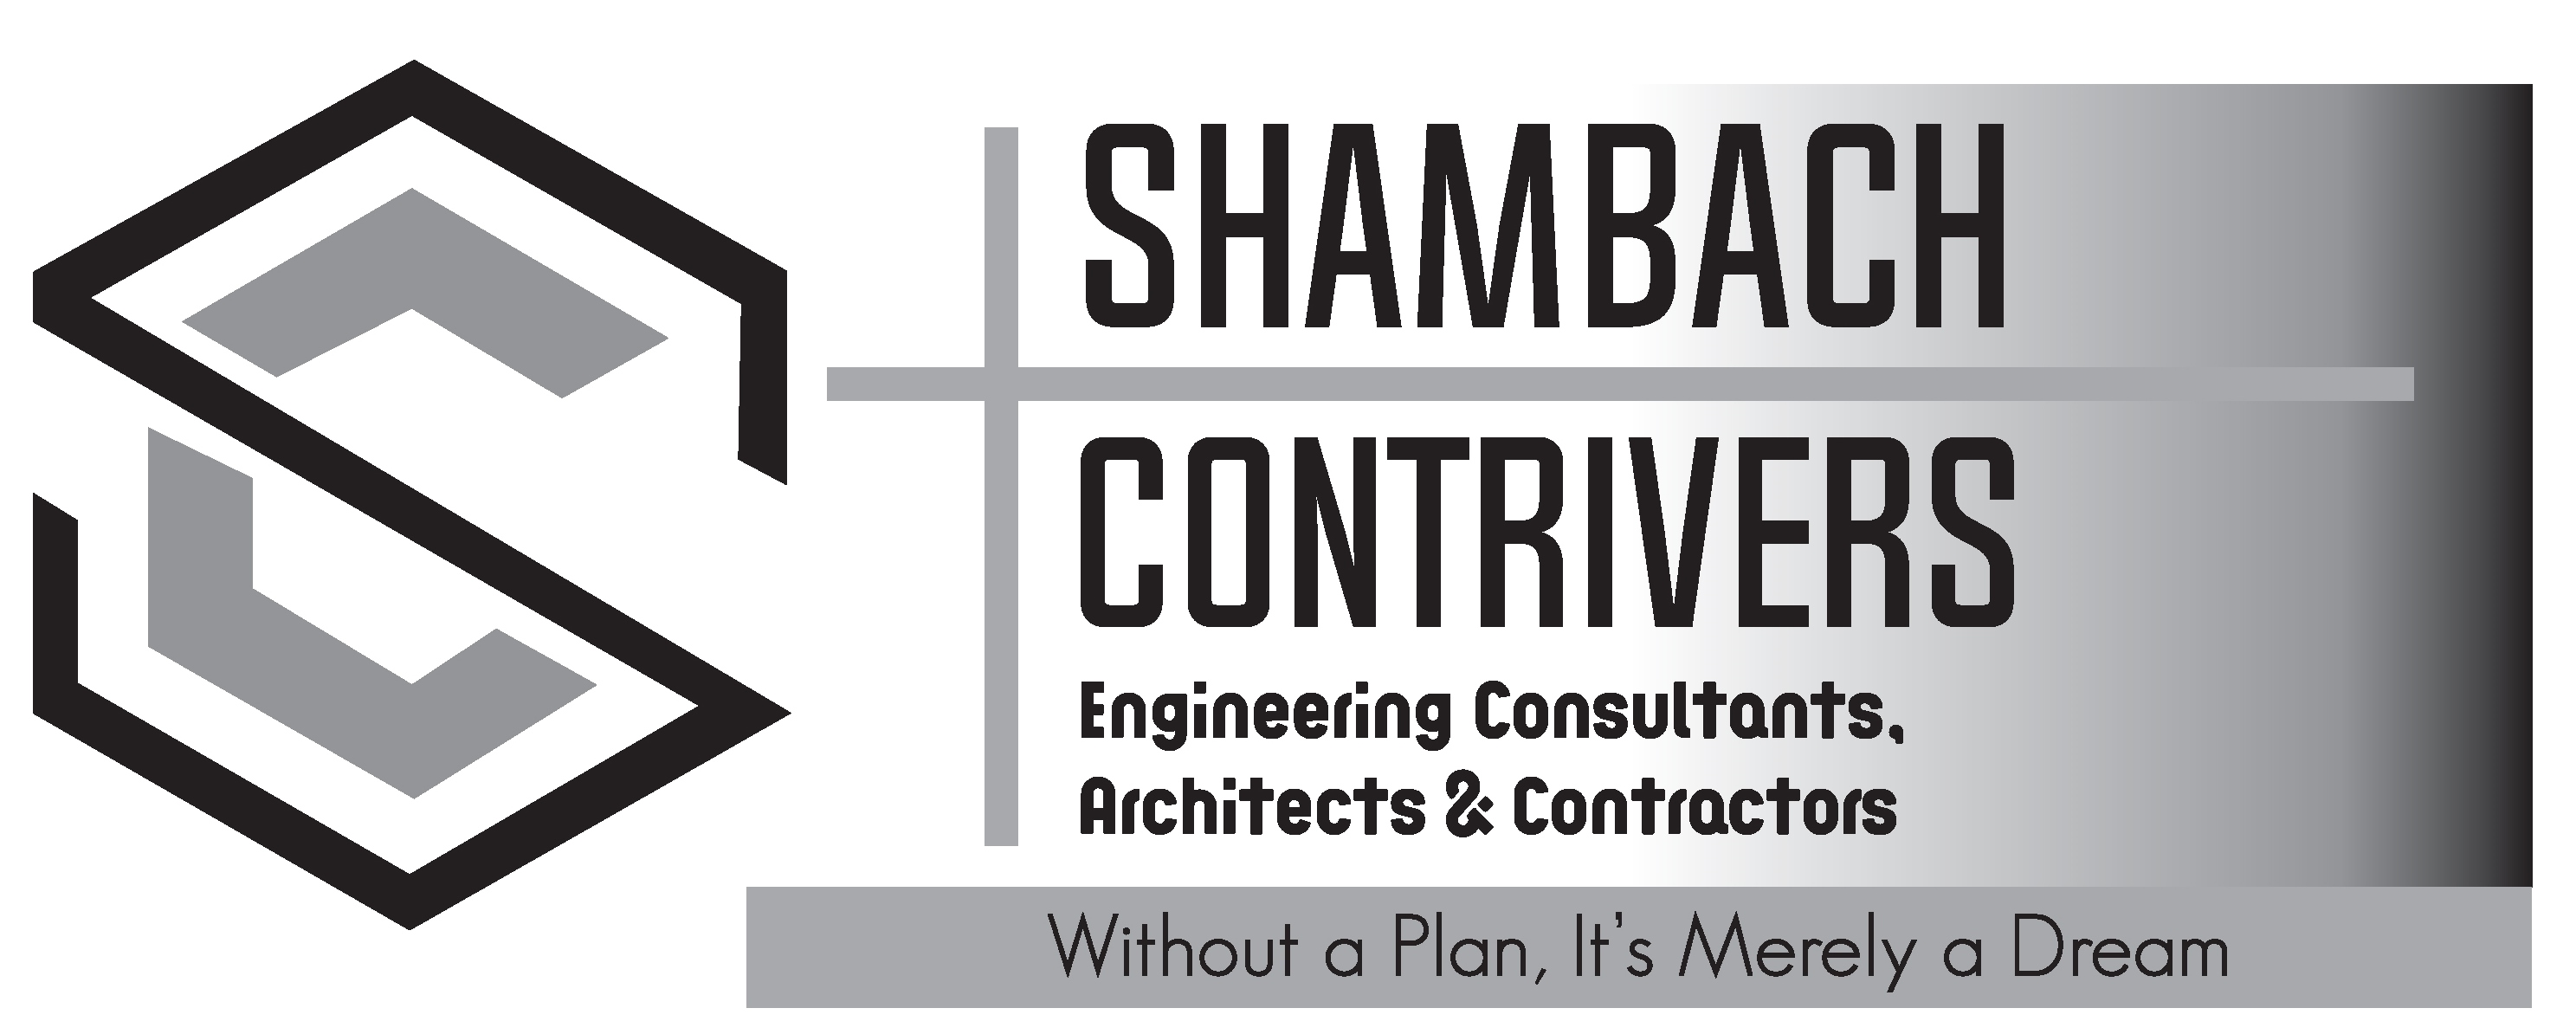 Shambach Contrivers Logo